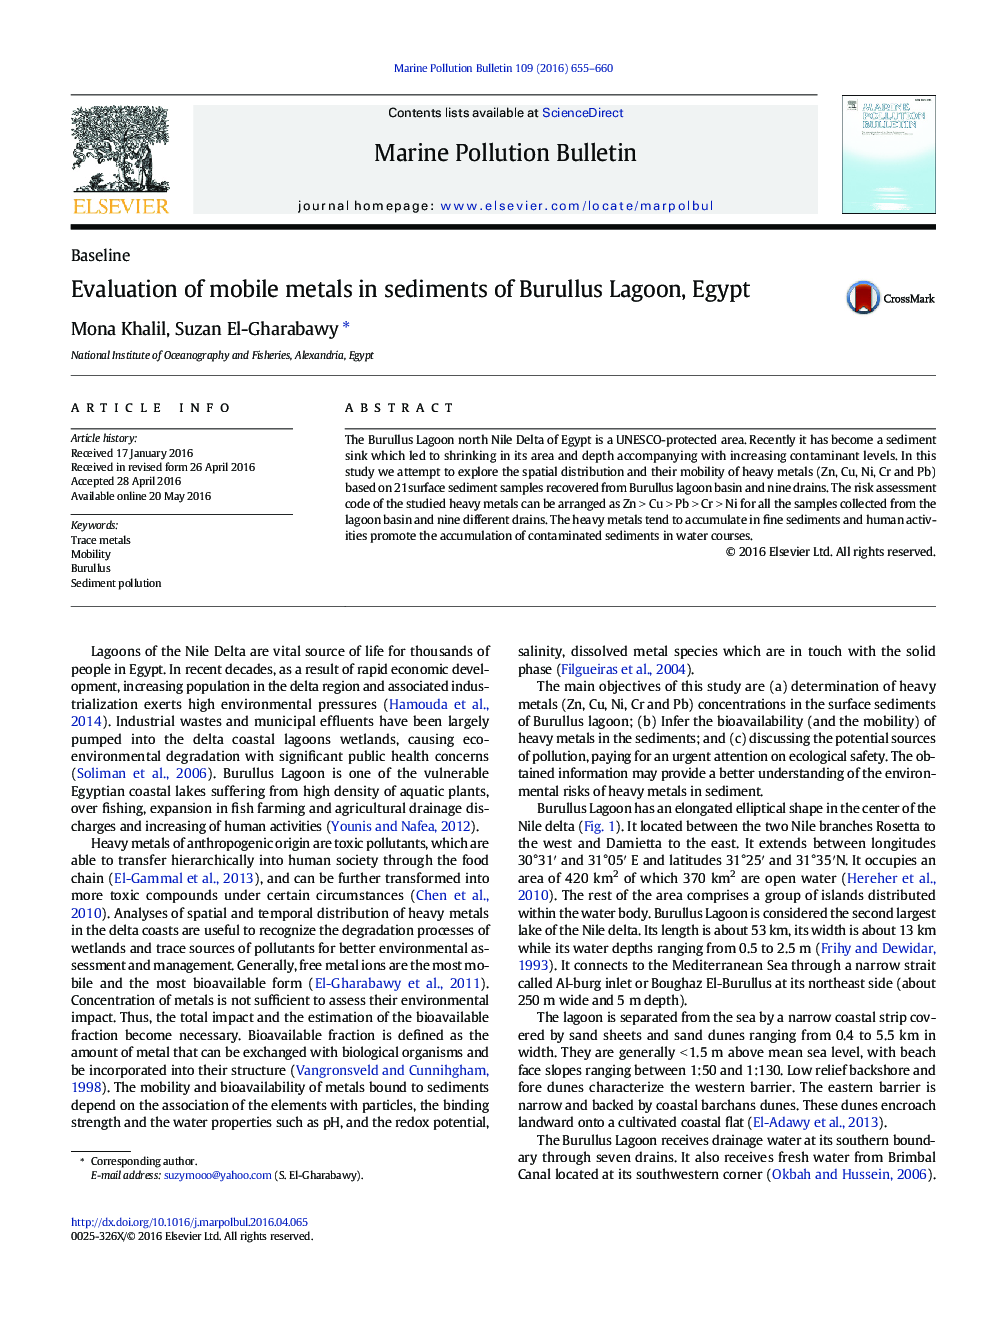 Evaluation of mobile metals in sediments of Burullus Lagoon, Egypt